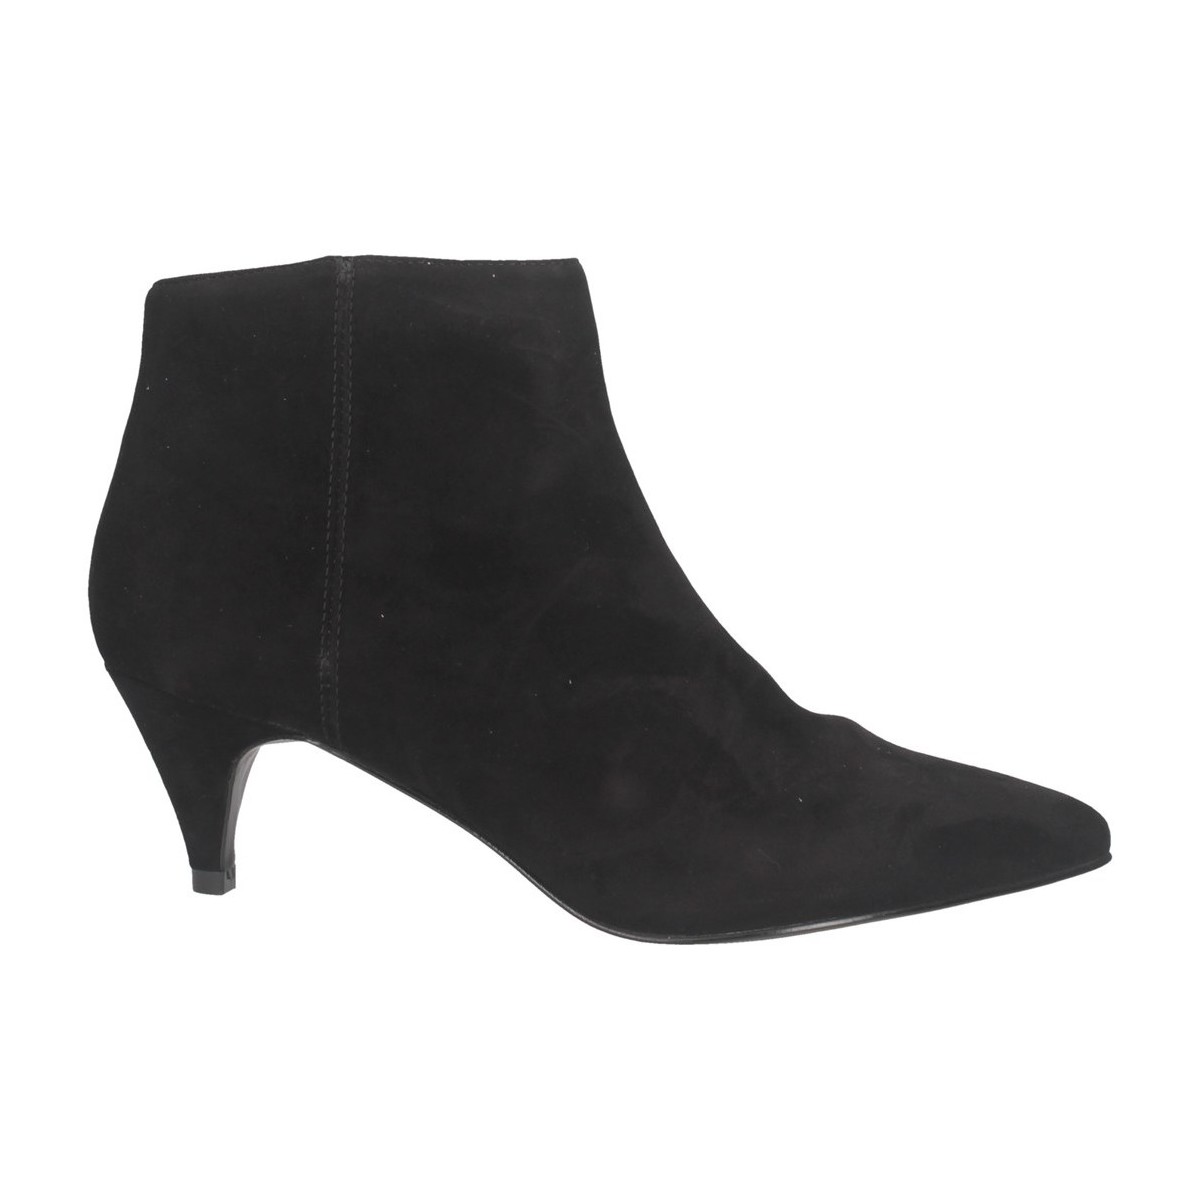 Chaussures Femme Low boots Steve Madden SMSLUCINDA-BLKS Noir